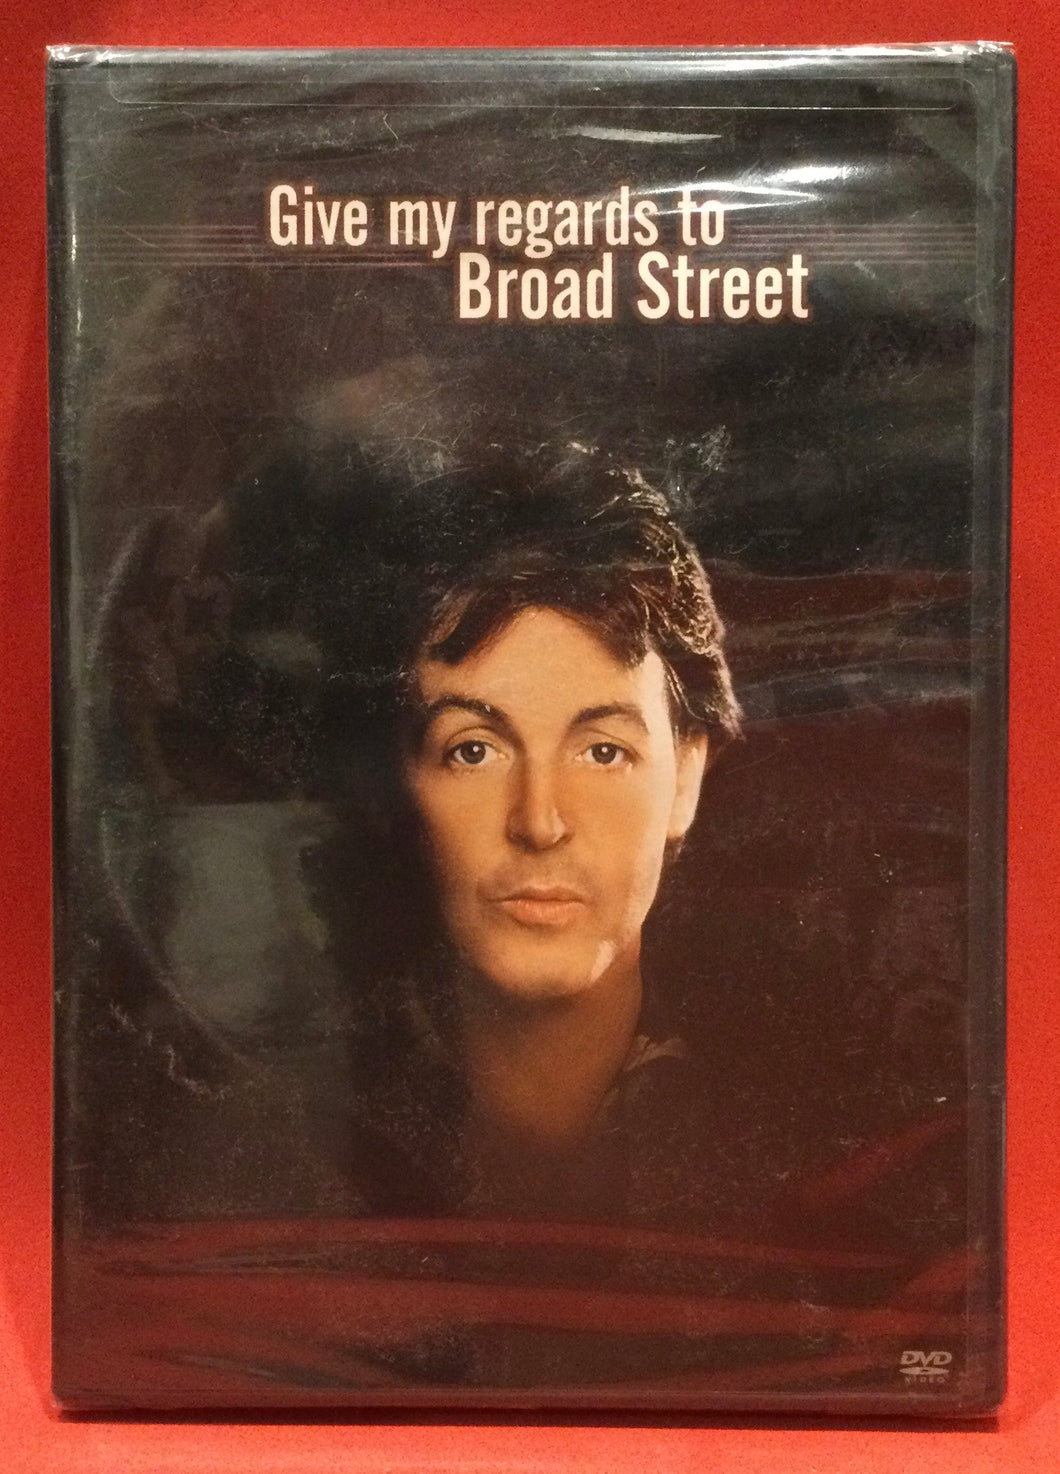 PAUL McCARTNEY - GIVE MY REGARDS TO BROAD STREET DVD (SEALED)